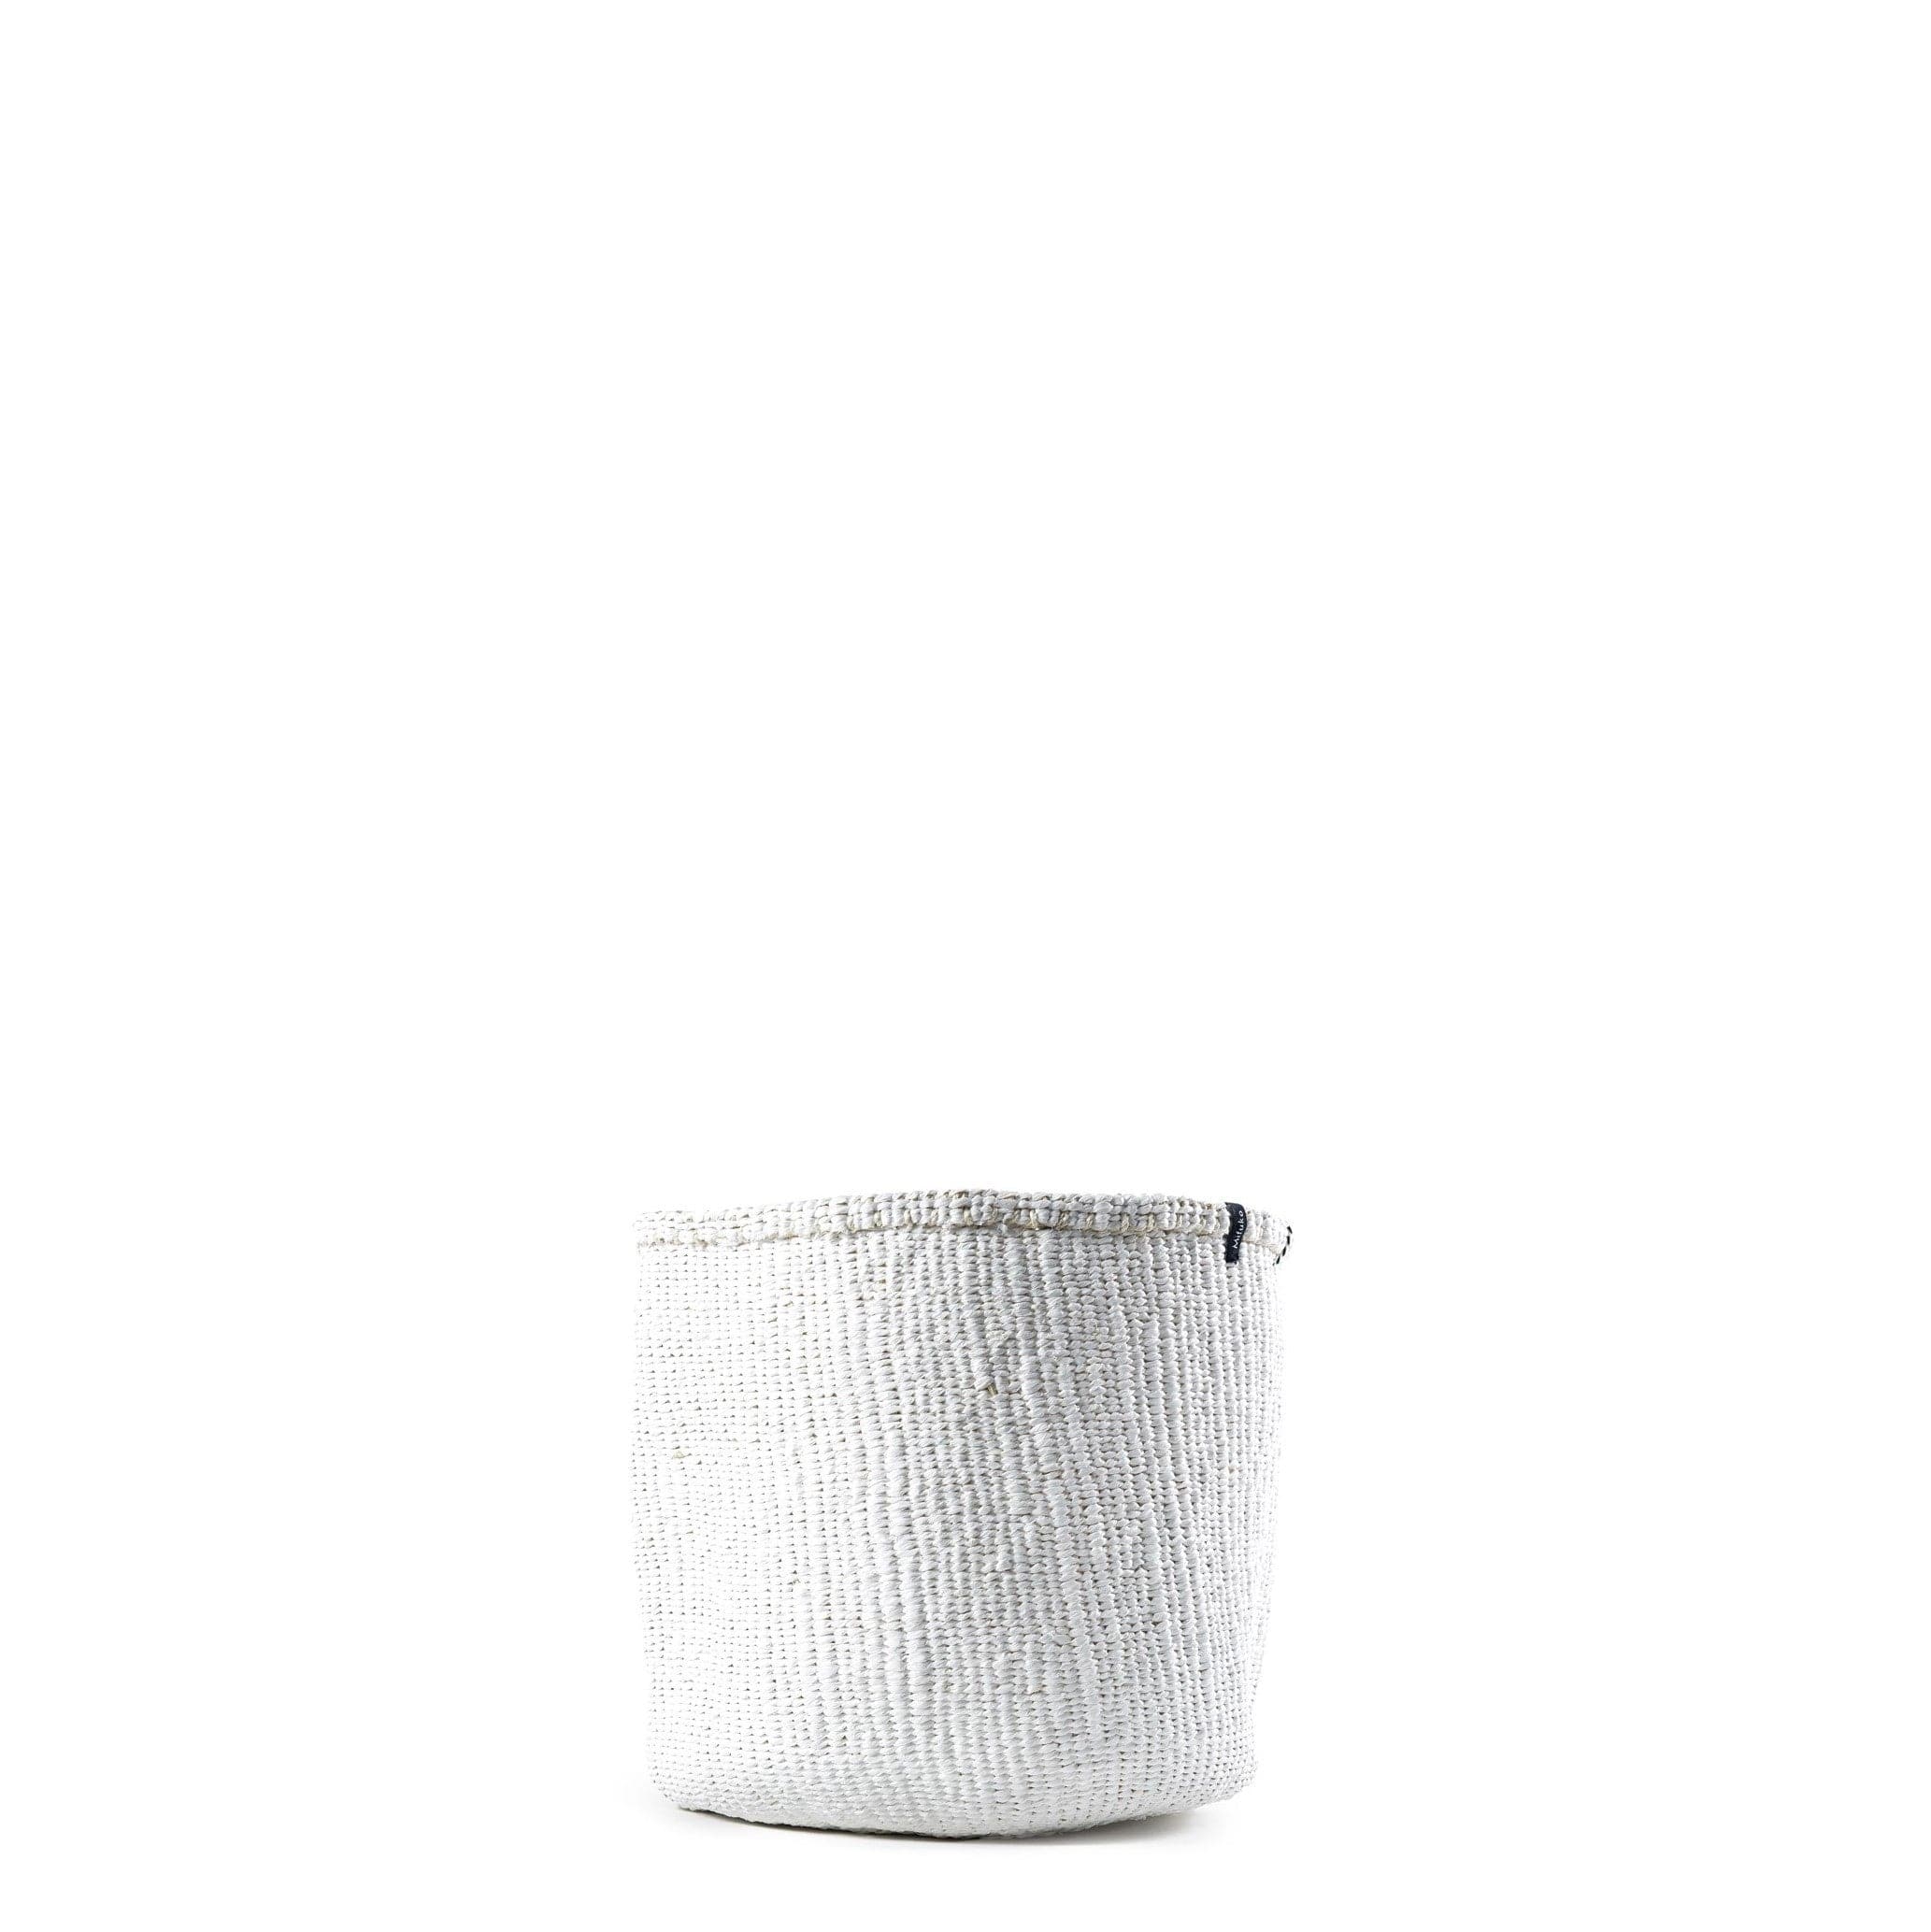 Mifuko Partly recycled plastic and sisal Small basket S Kiondo basket | White S